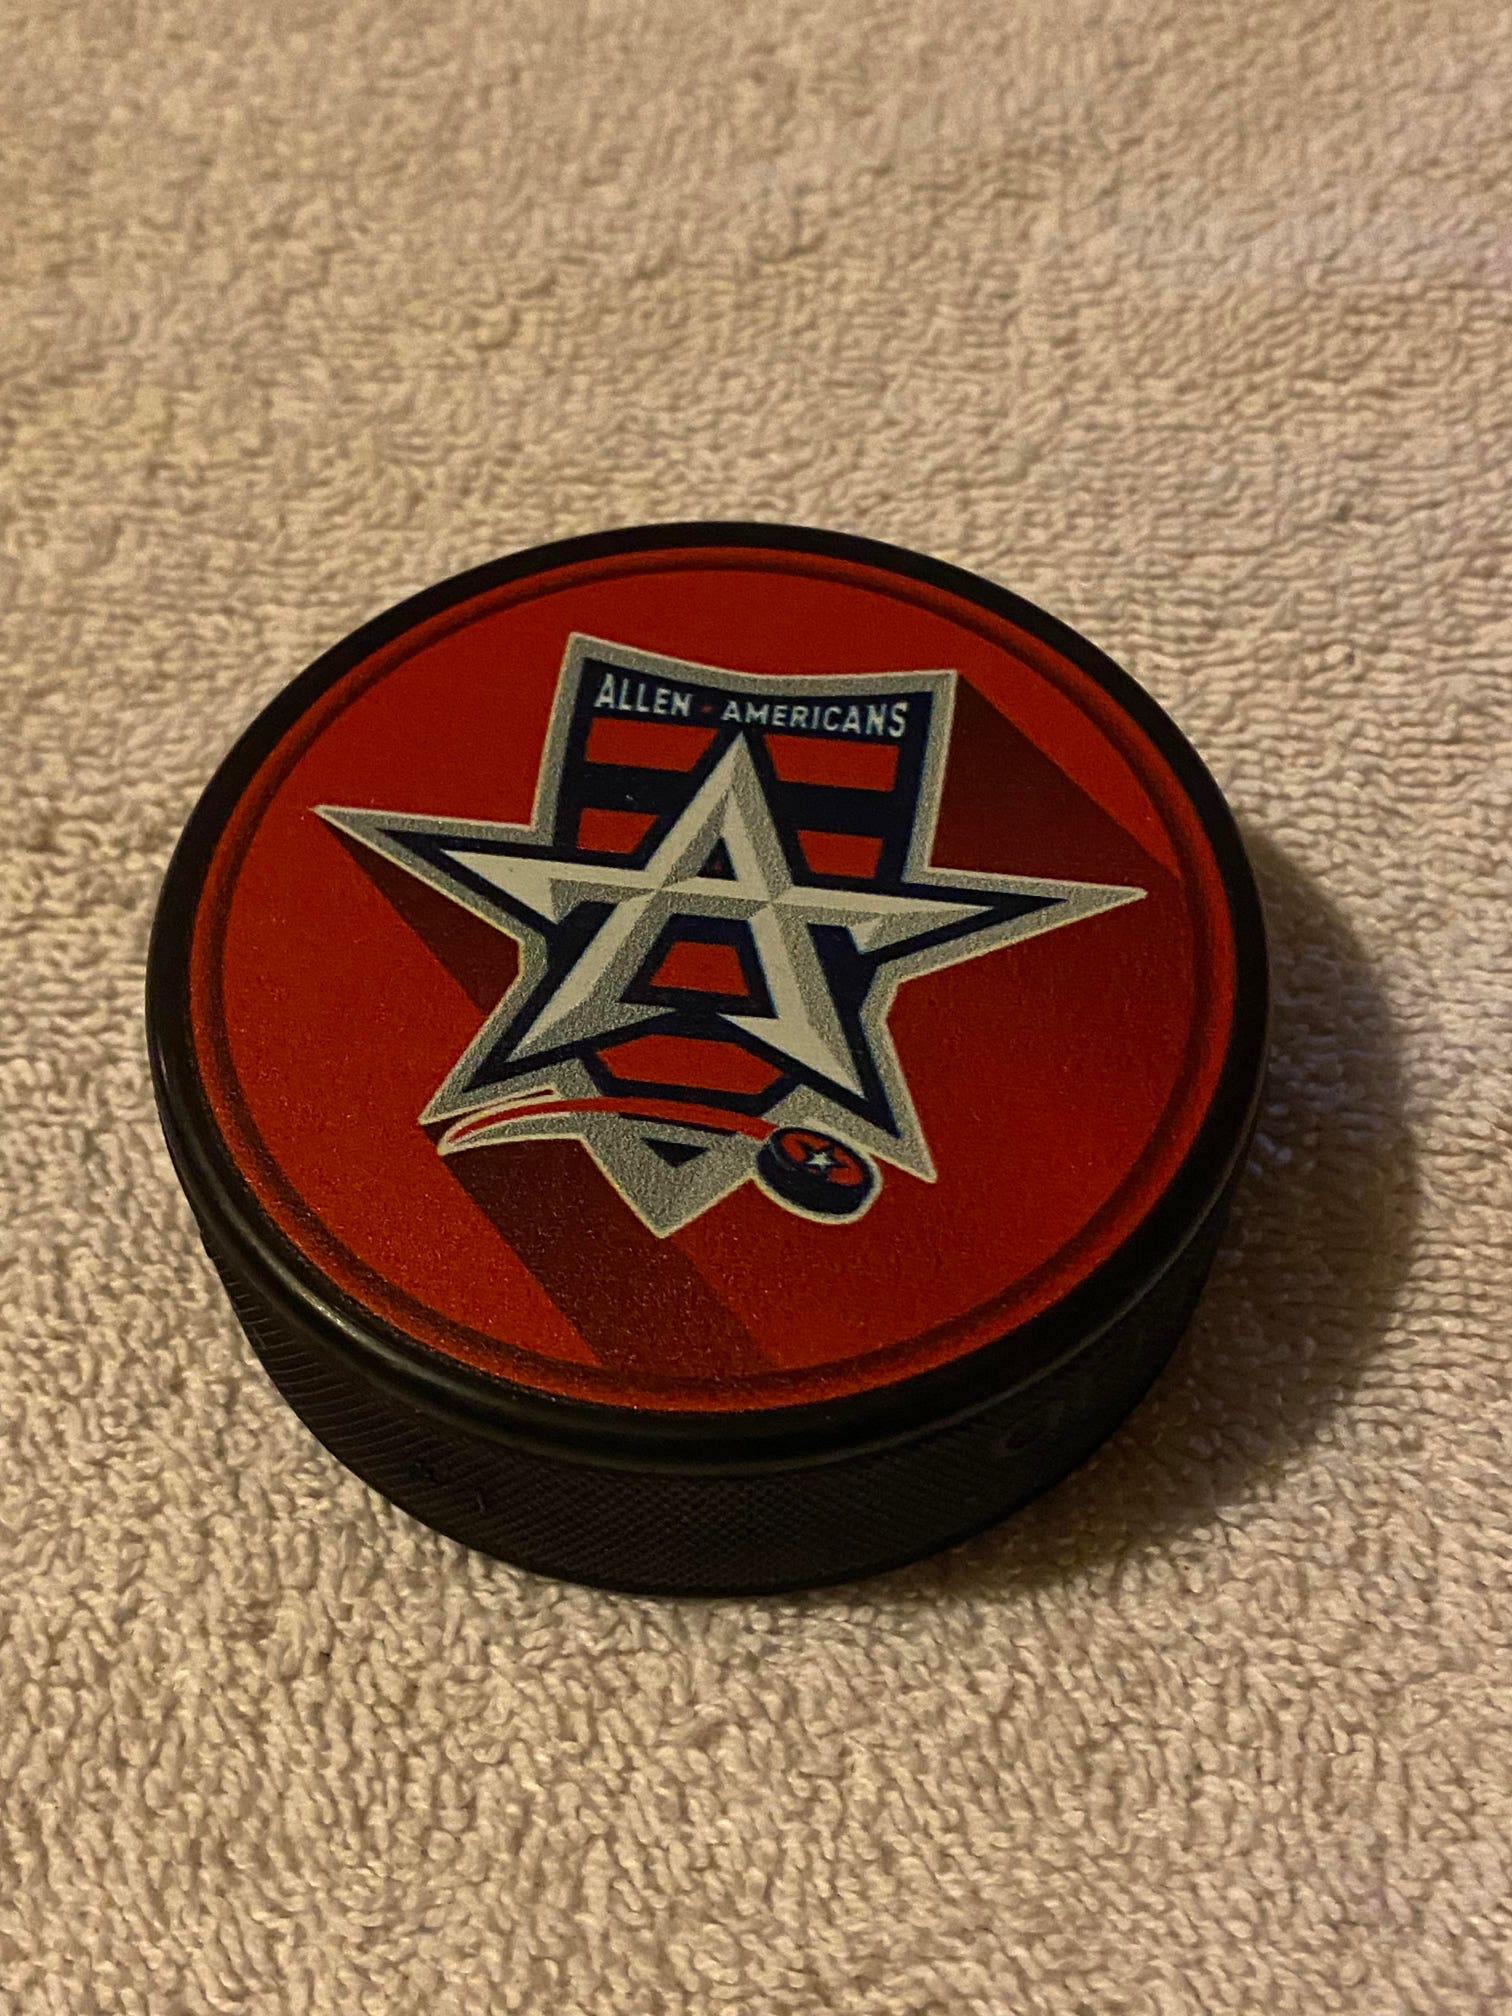 Allen Americans ECHL Hockey Souvenir Hockey Puck